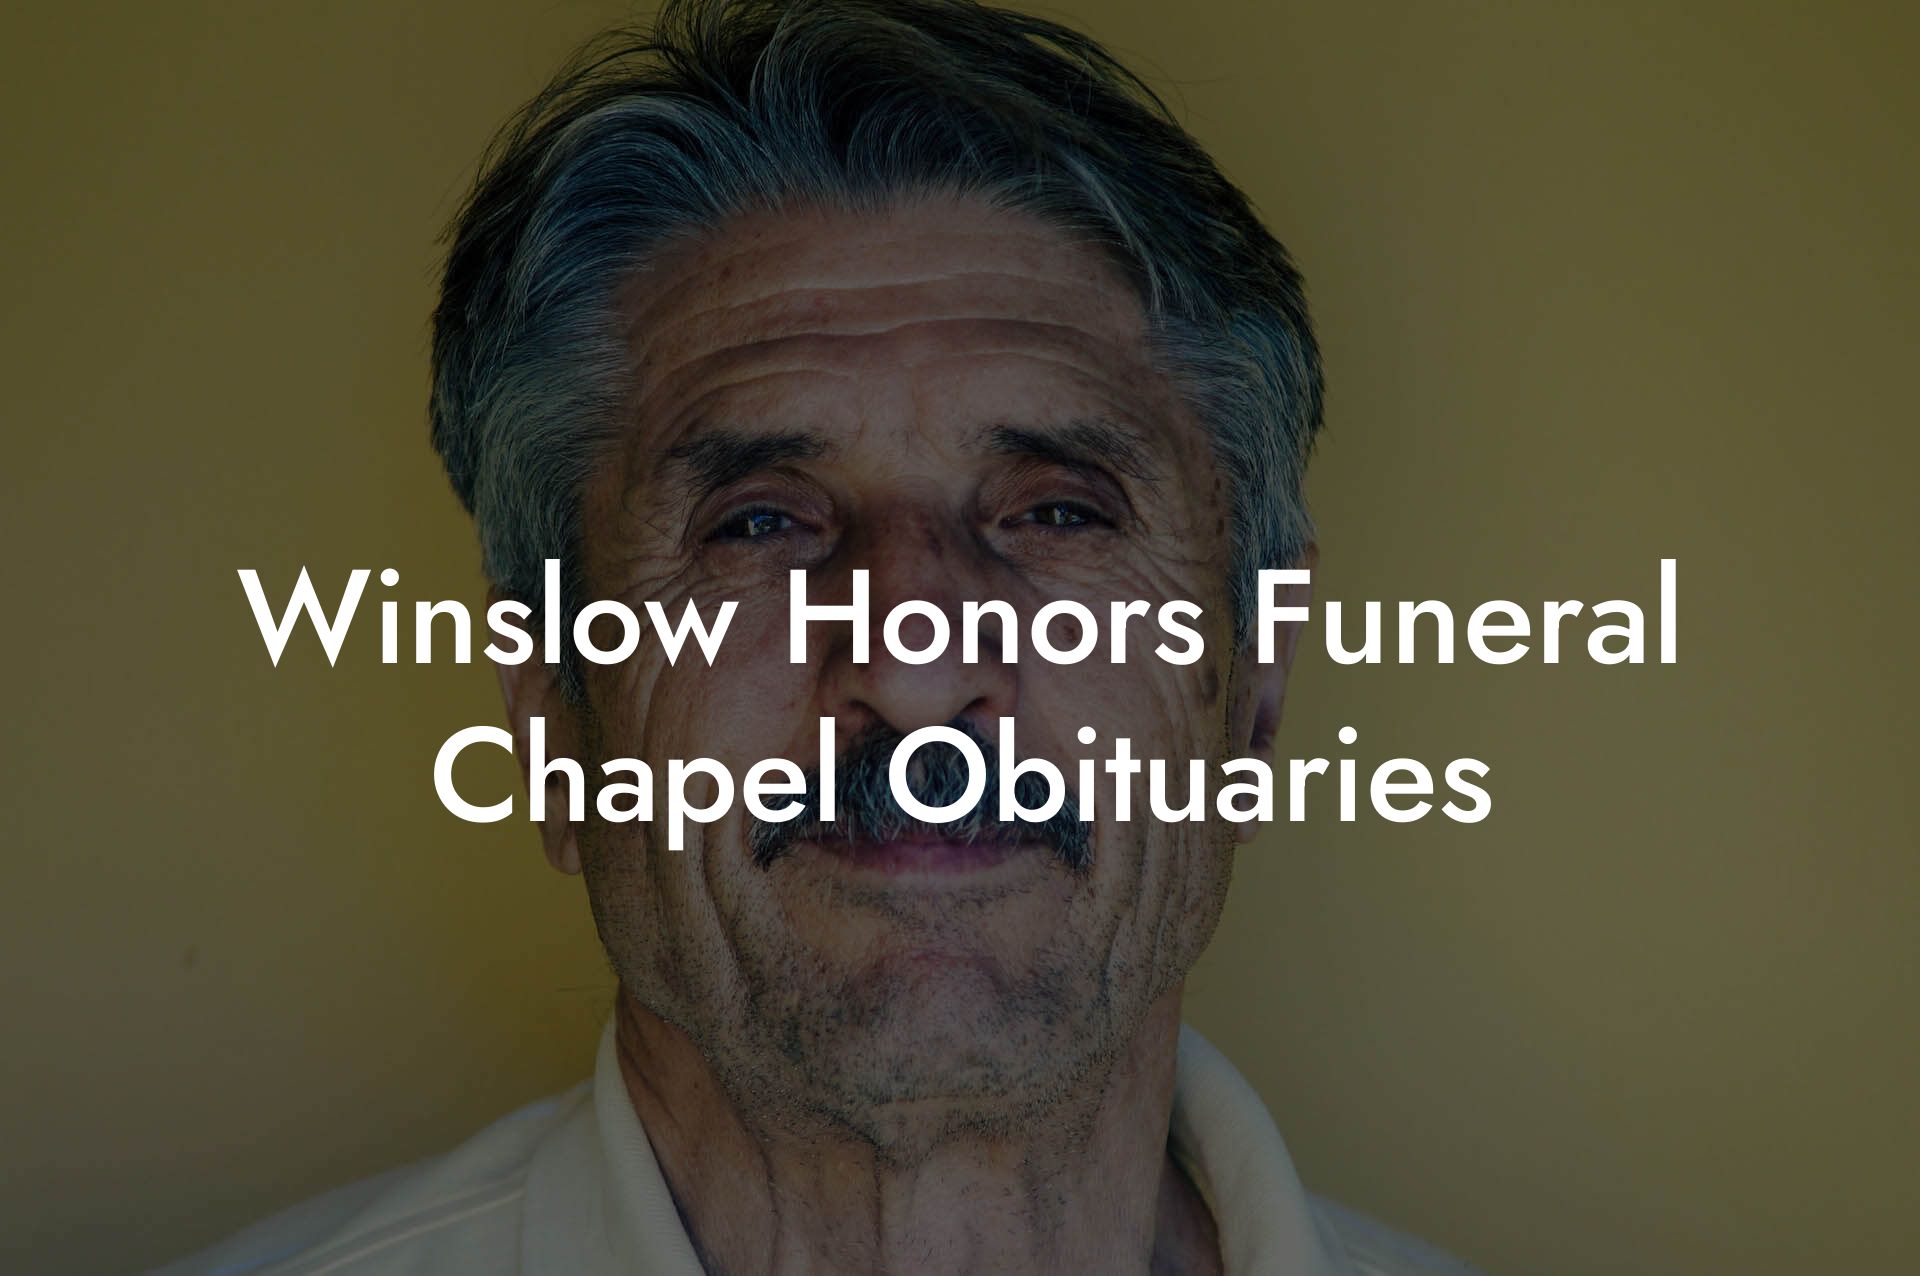 Winslow Honors Funeral Chapel Obituaries